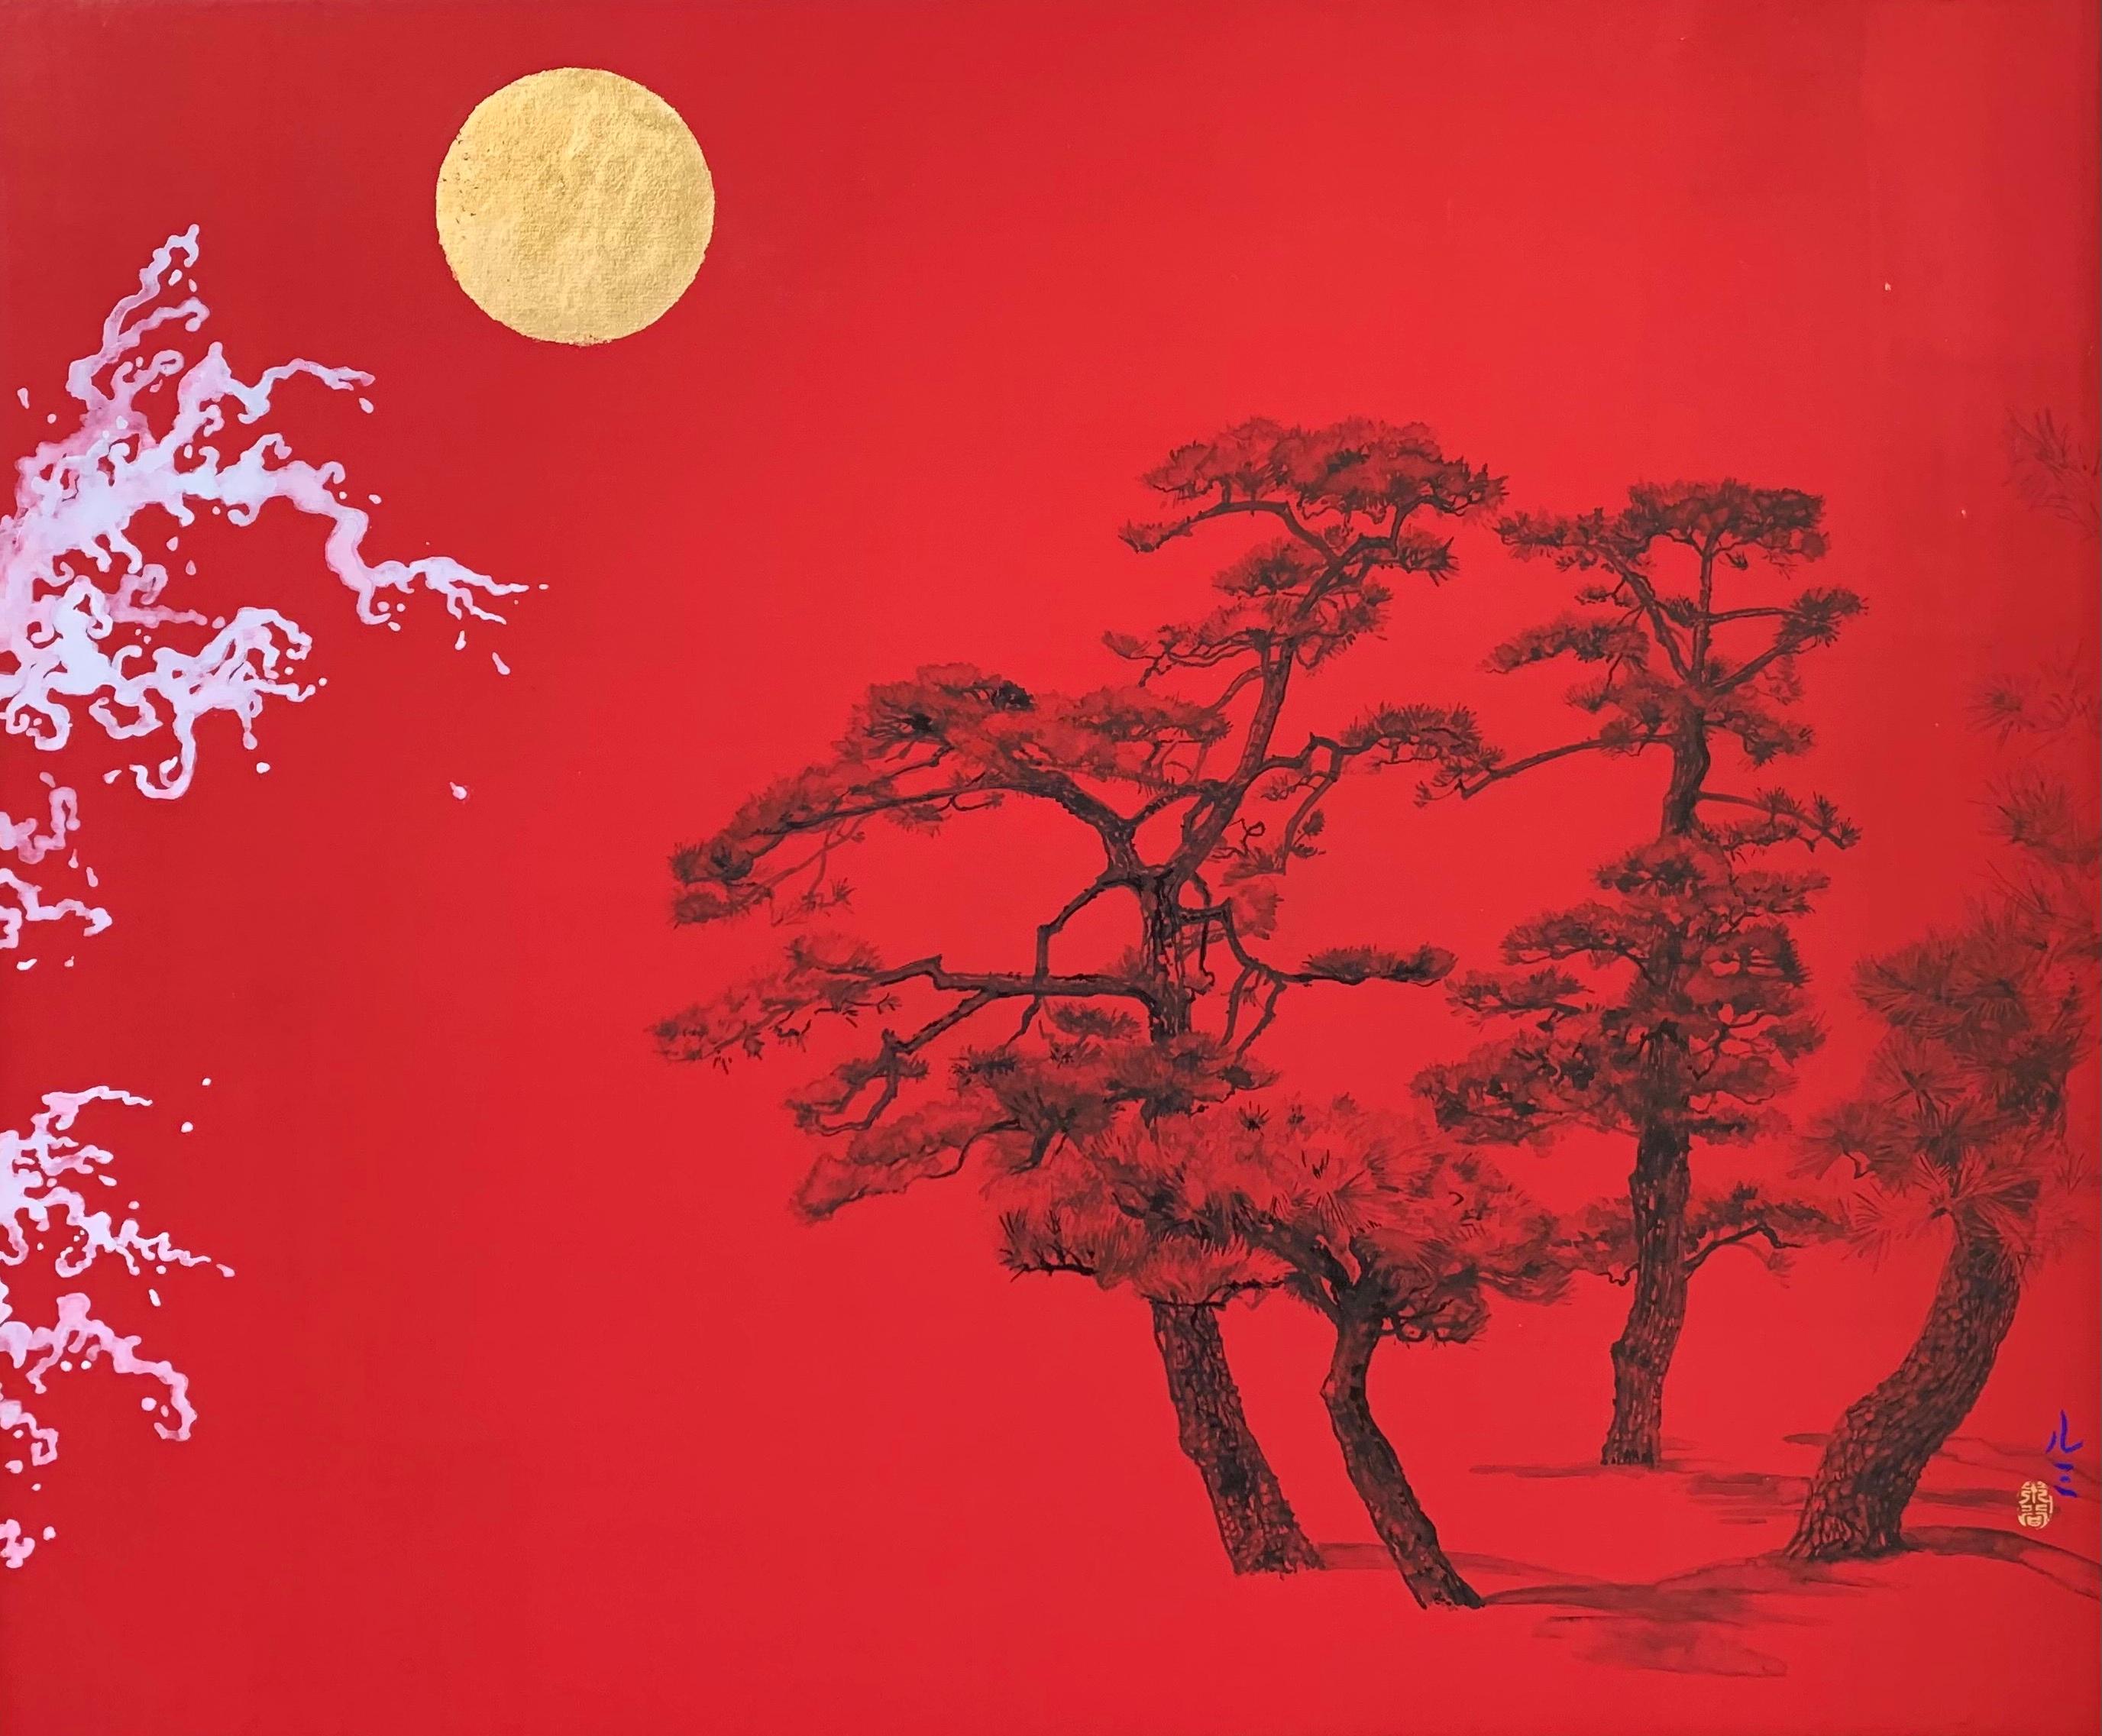 Pines facing waves II by Lumi Mizutani - Japanese Style Landscape Painting